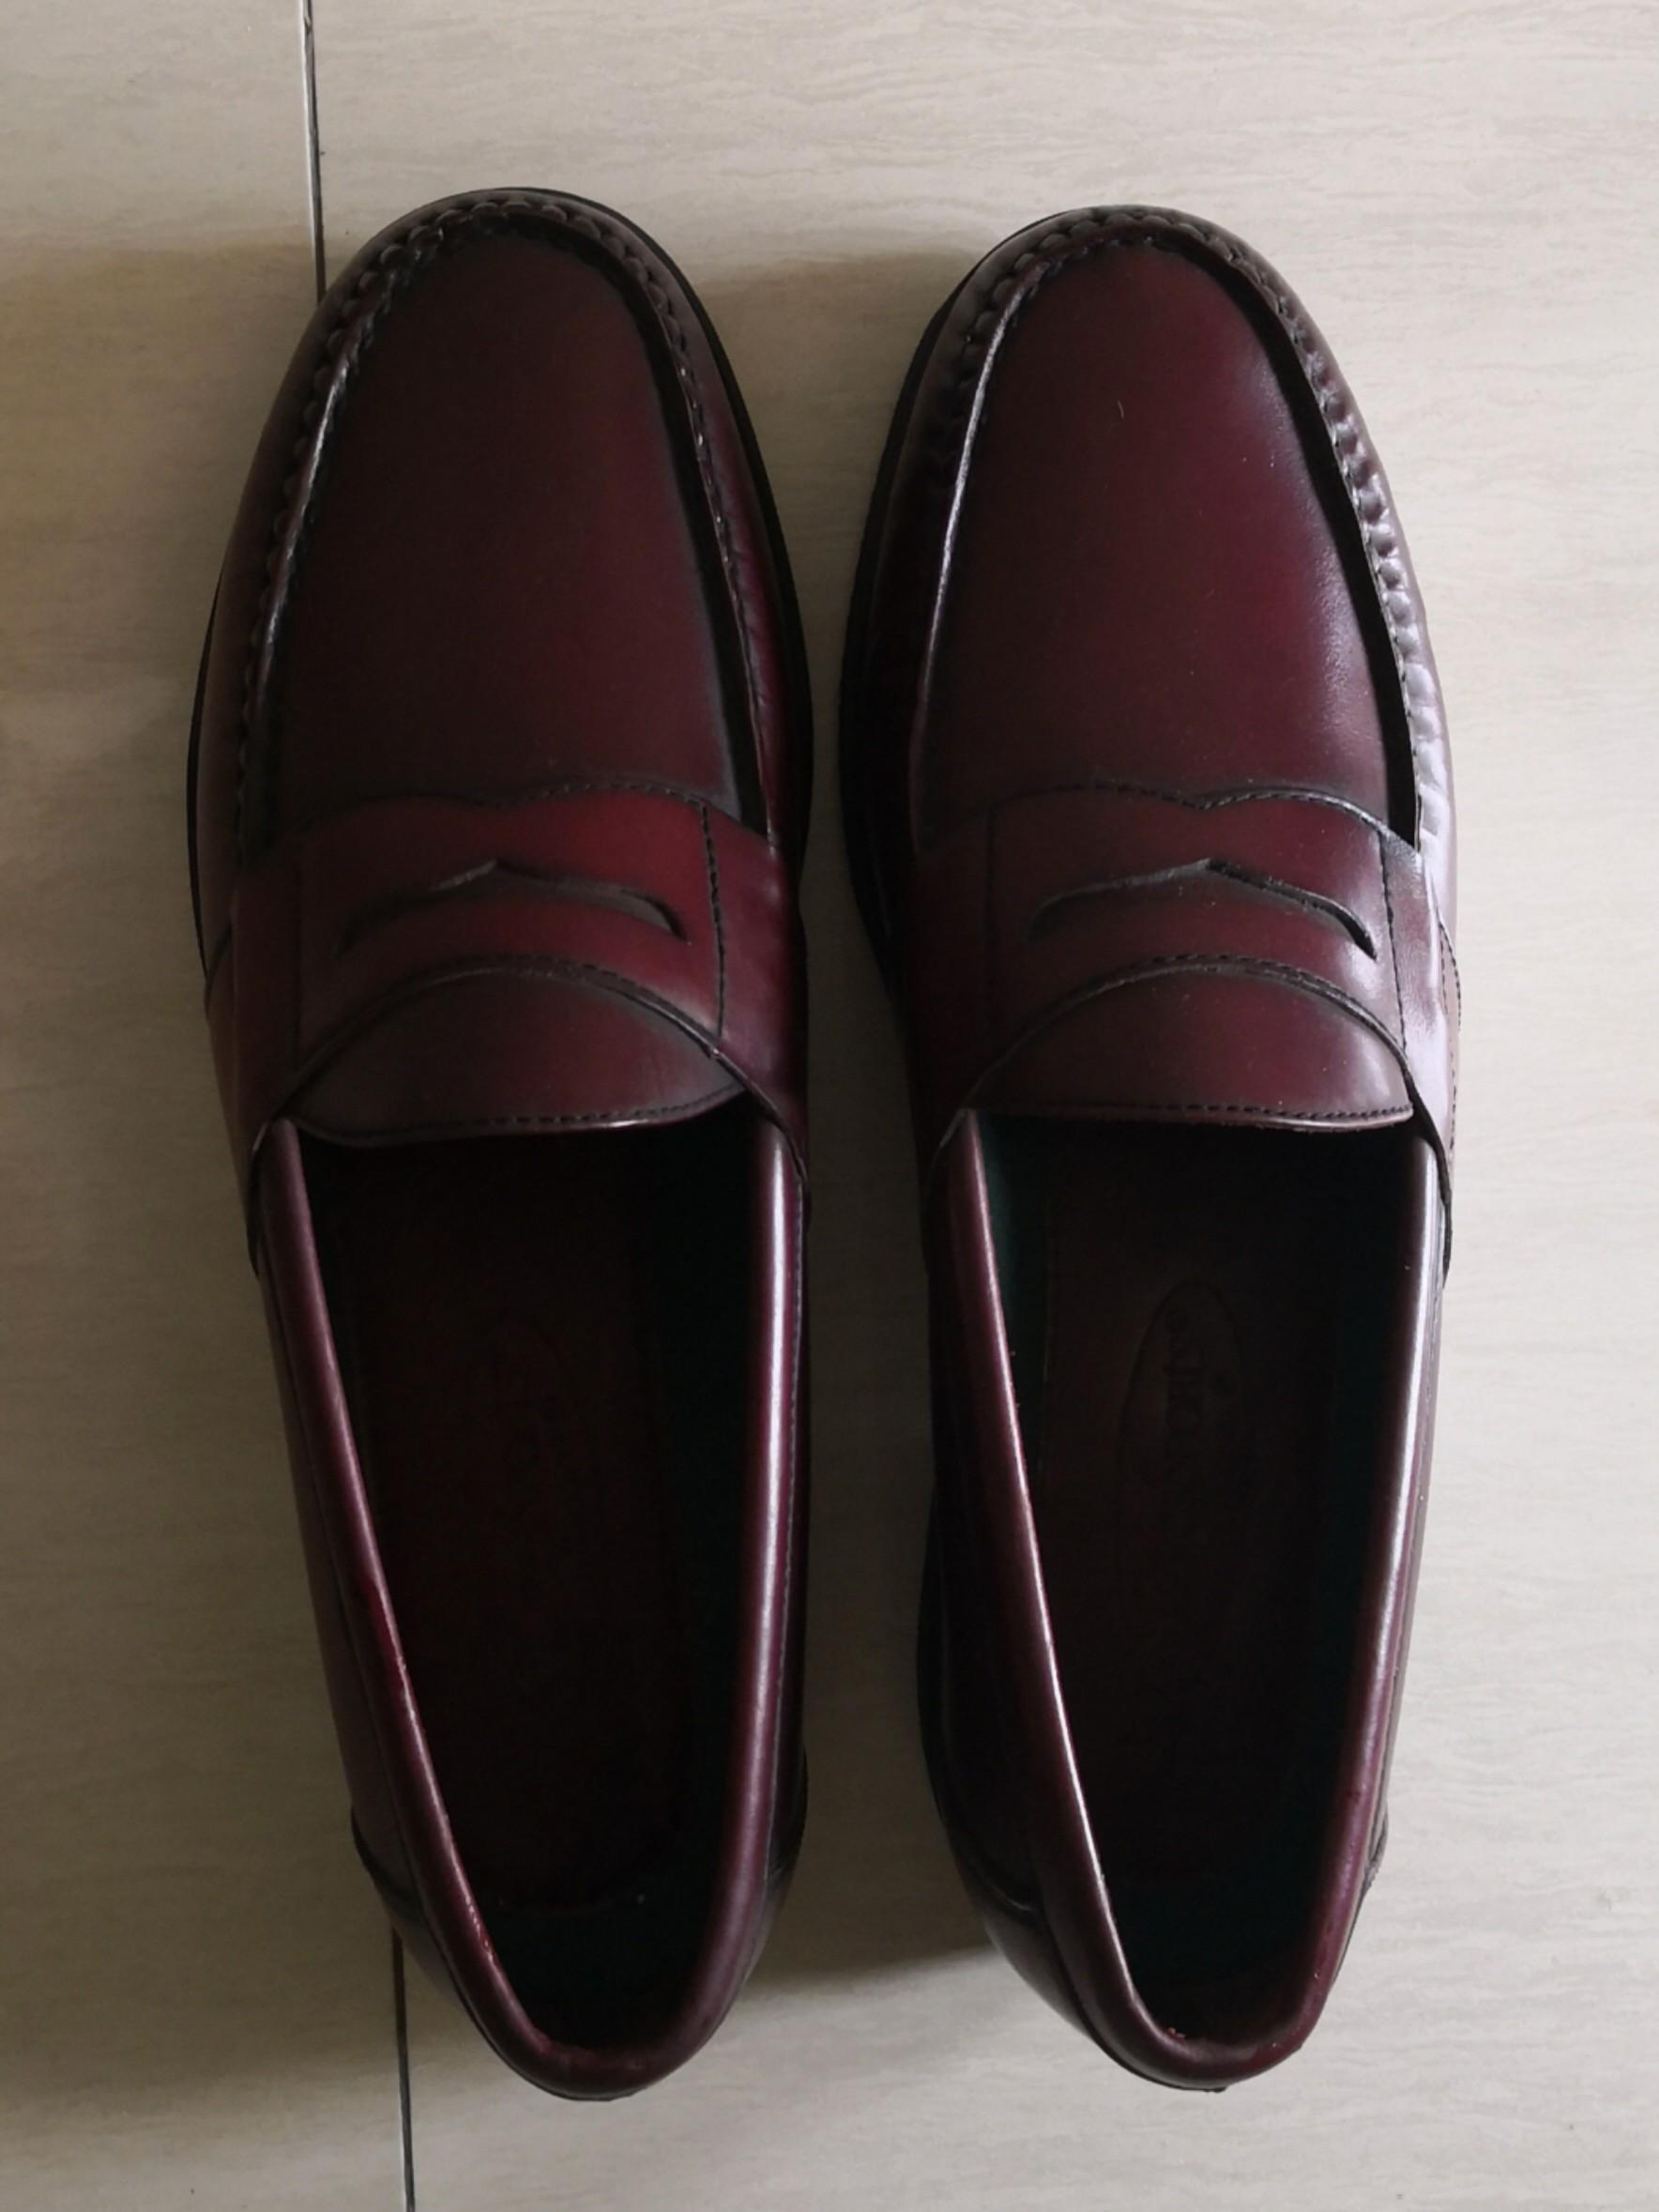 burgundy color shoes